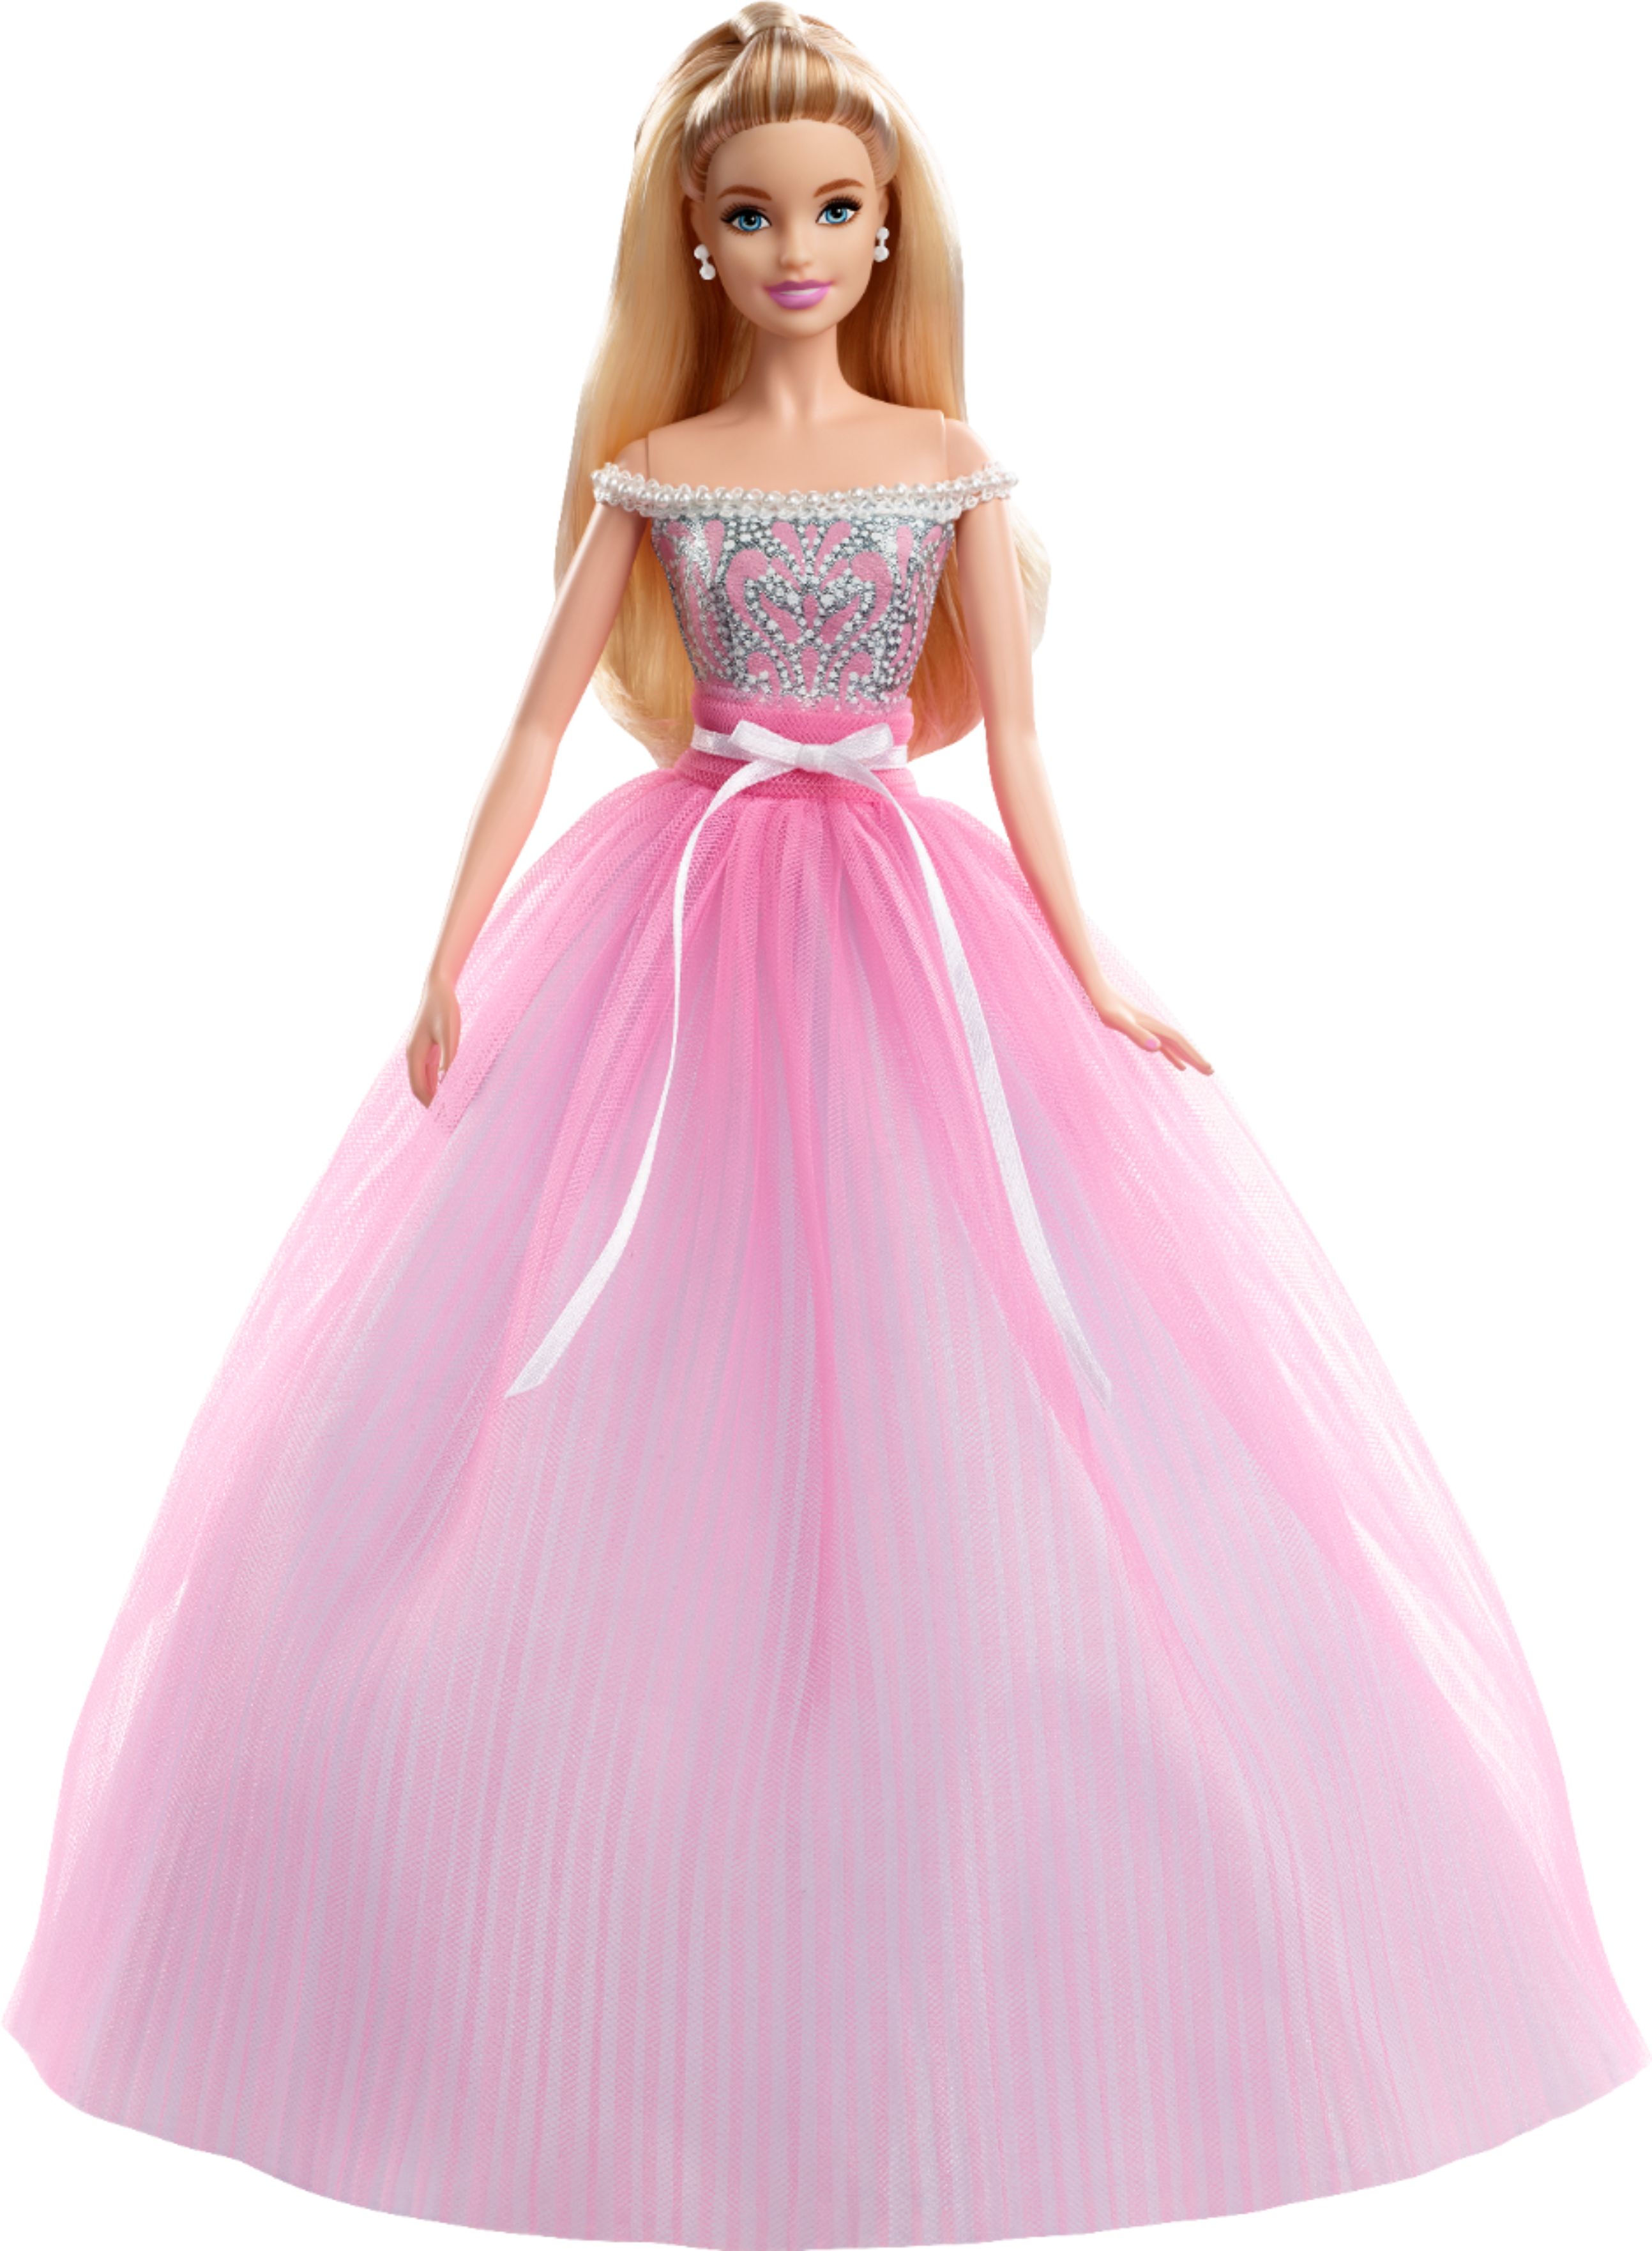 barbie doll in pink dress